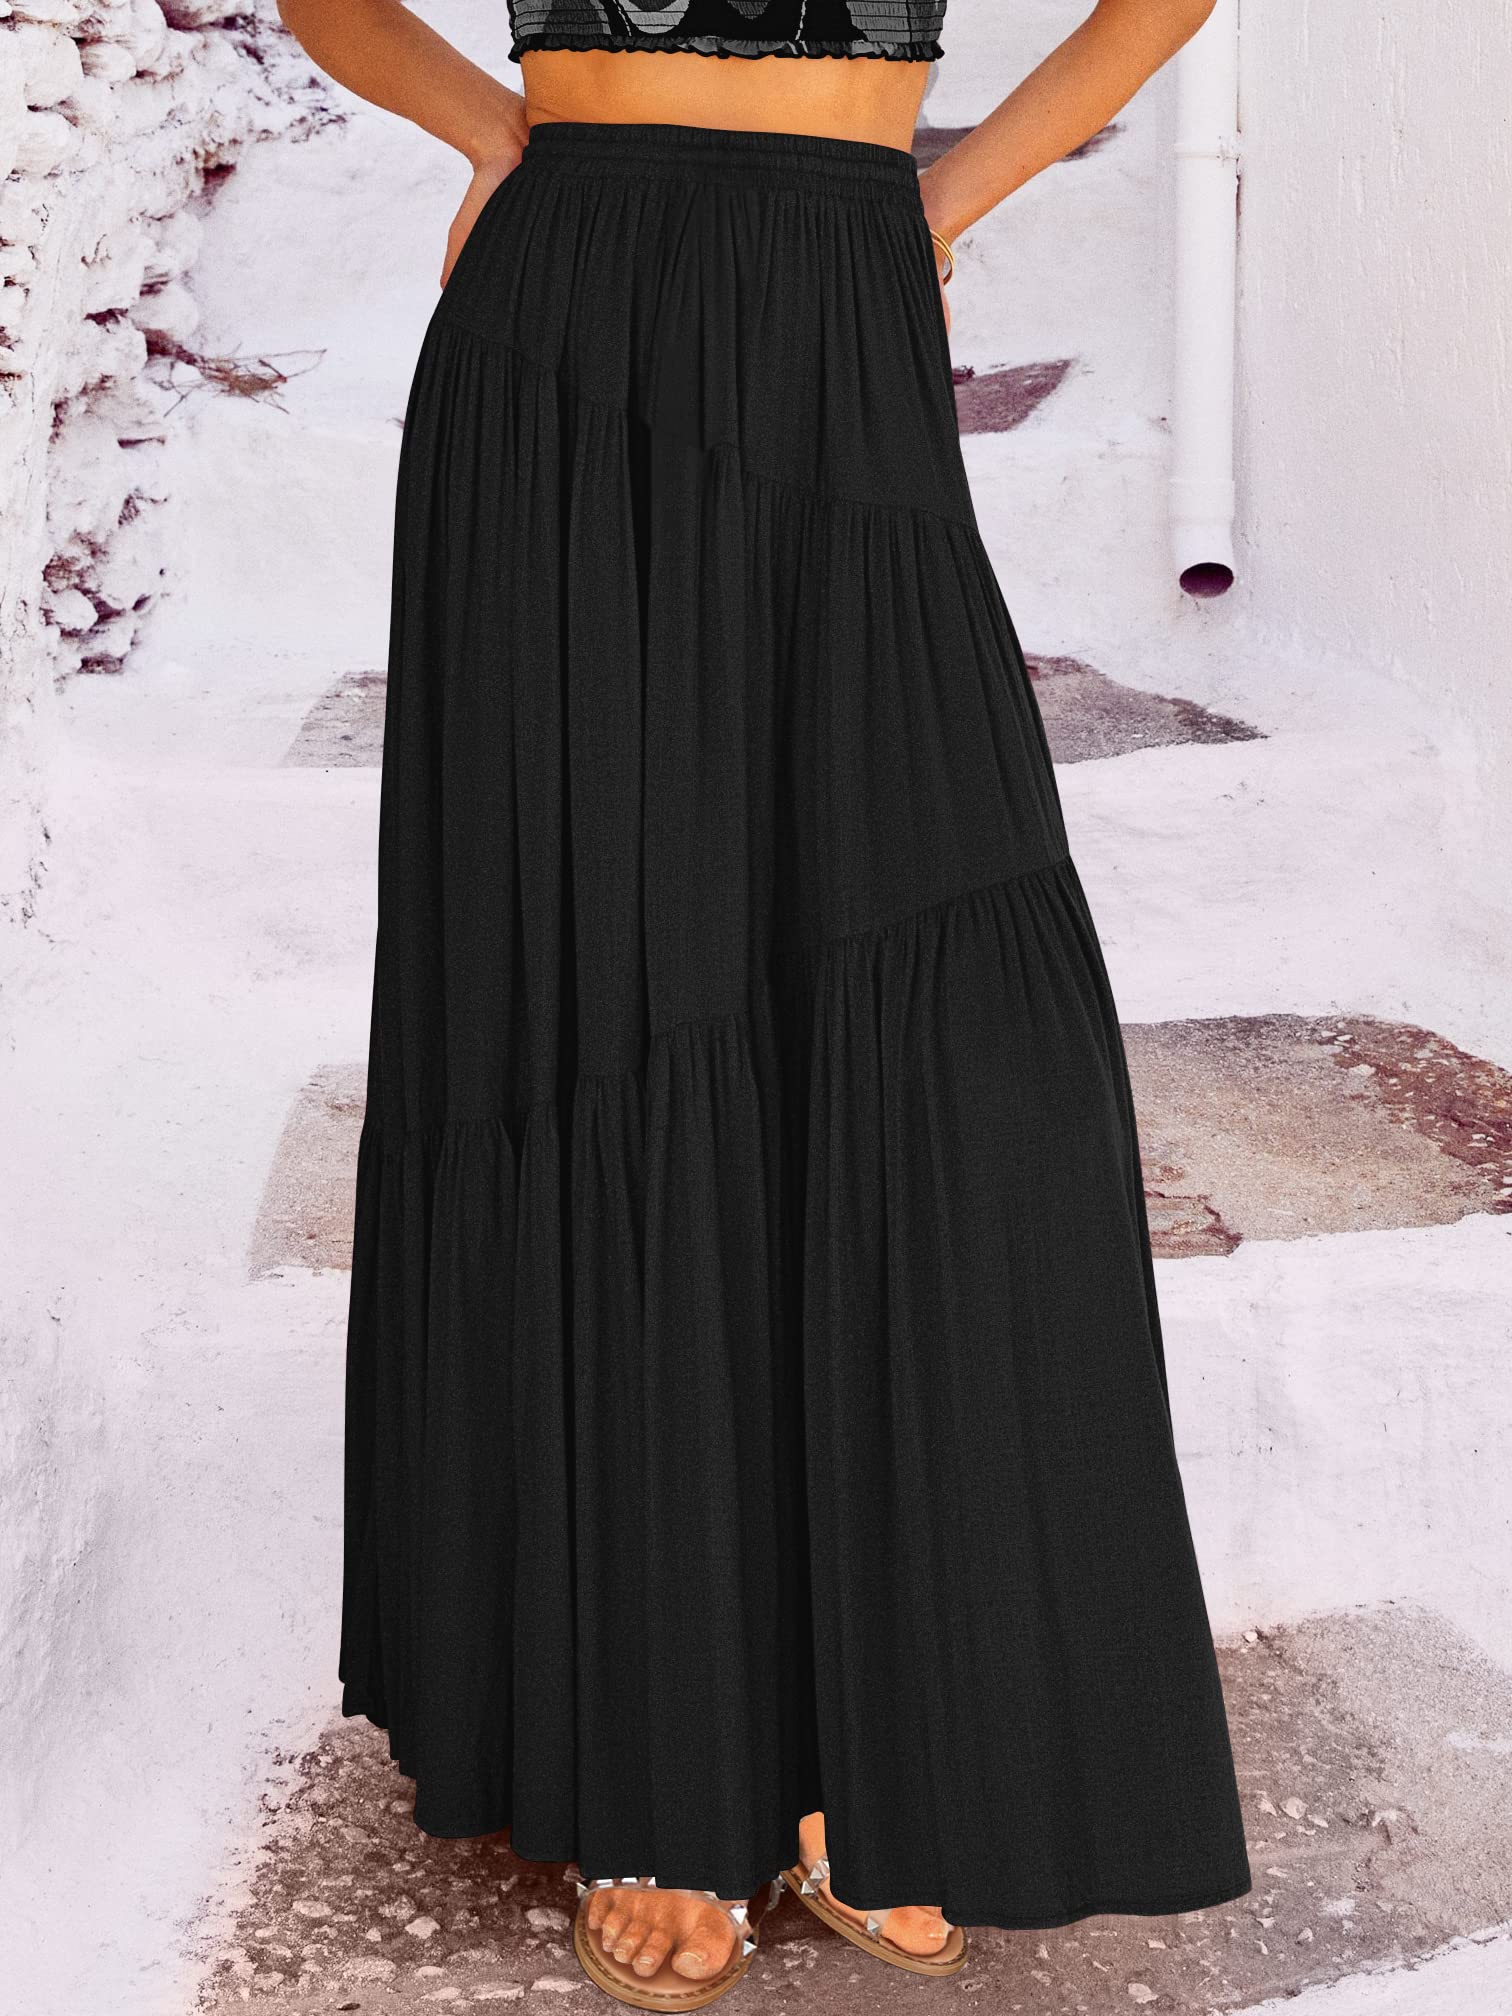 ANRABESS Women’s Boho Elastic High Waist Pleated A-Line Flowy Swing Asymmetric Tiered Maxi Long Skirt Dress with Pockets